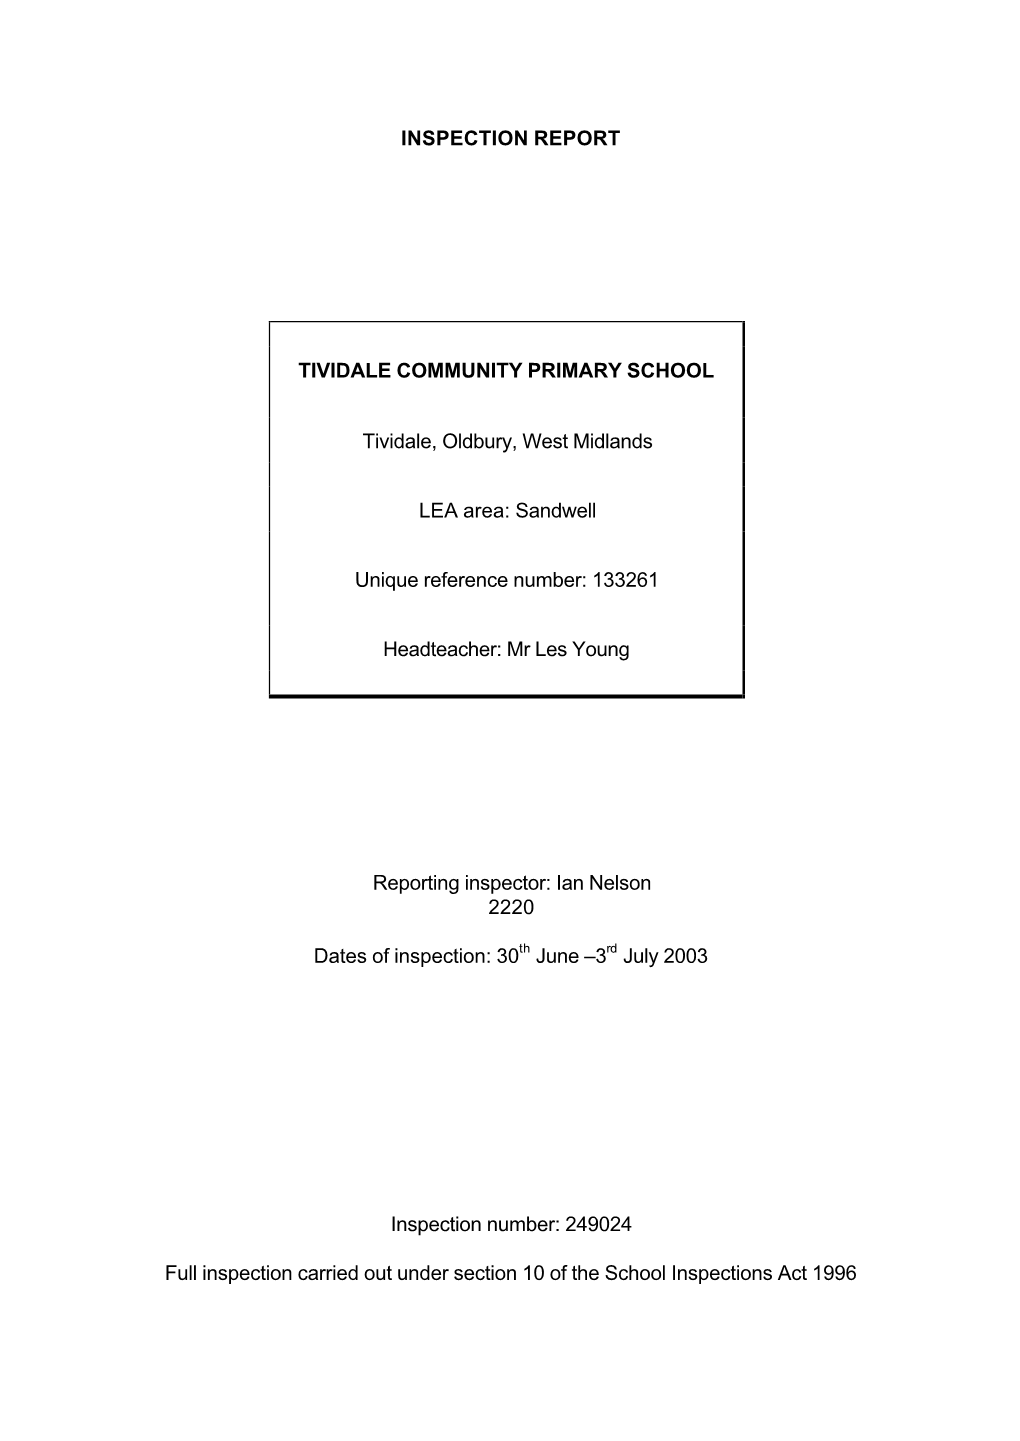 Inspection Report Tividale Community Primary School